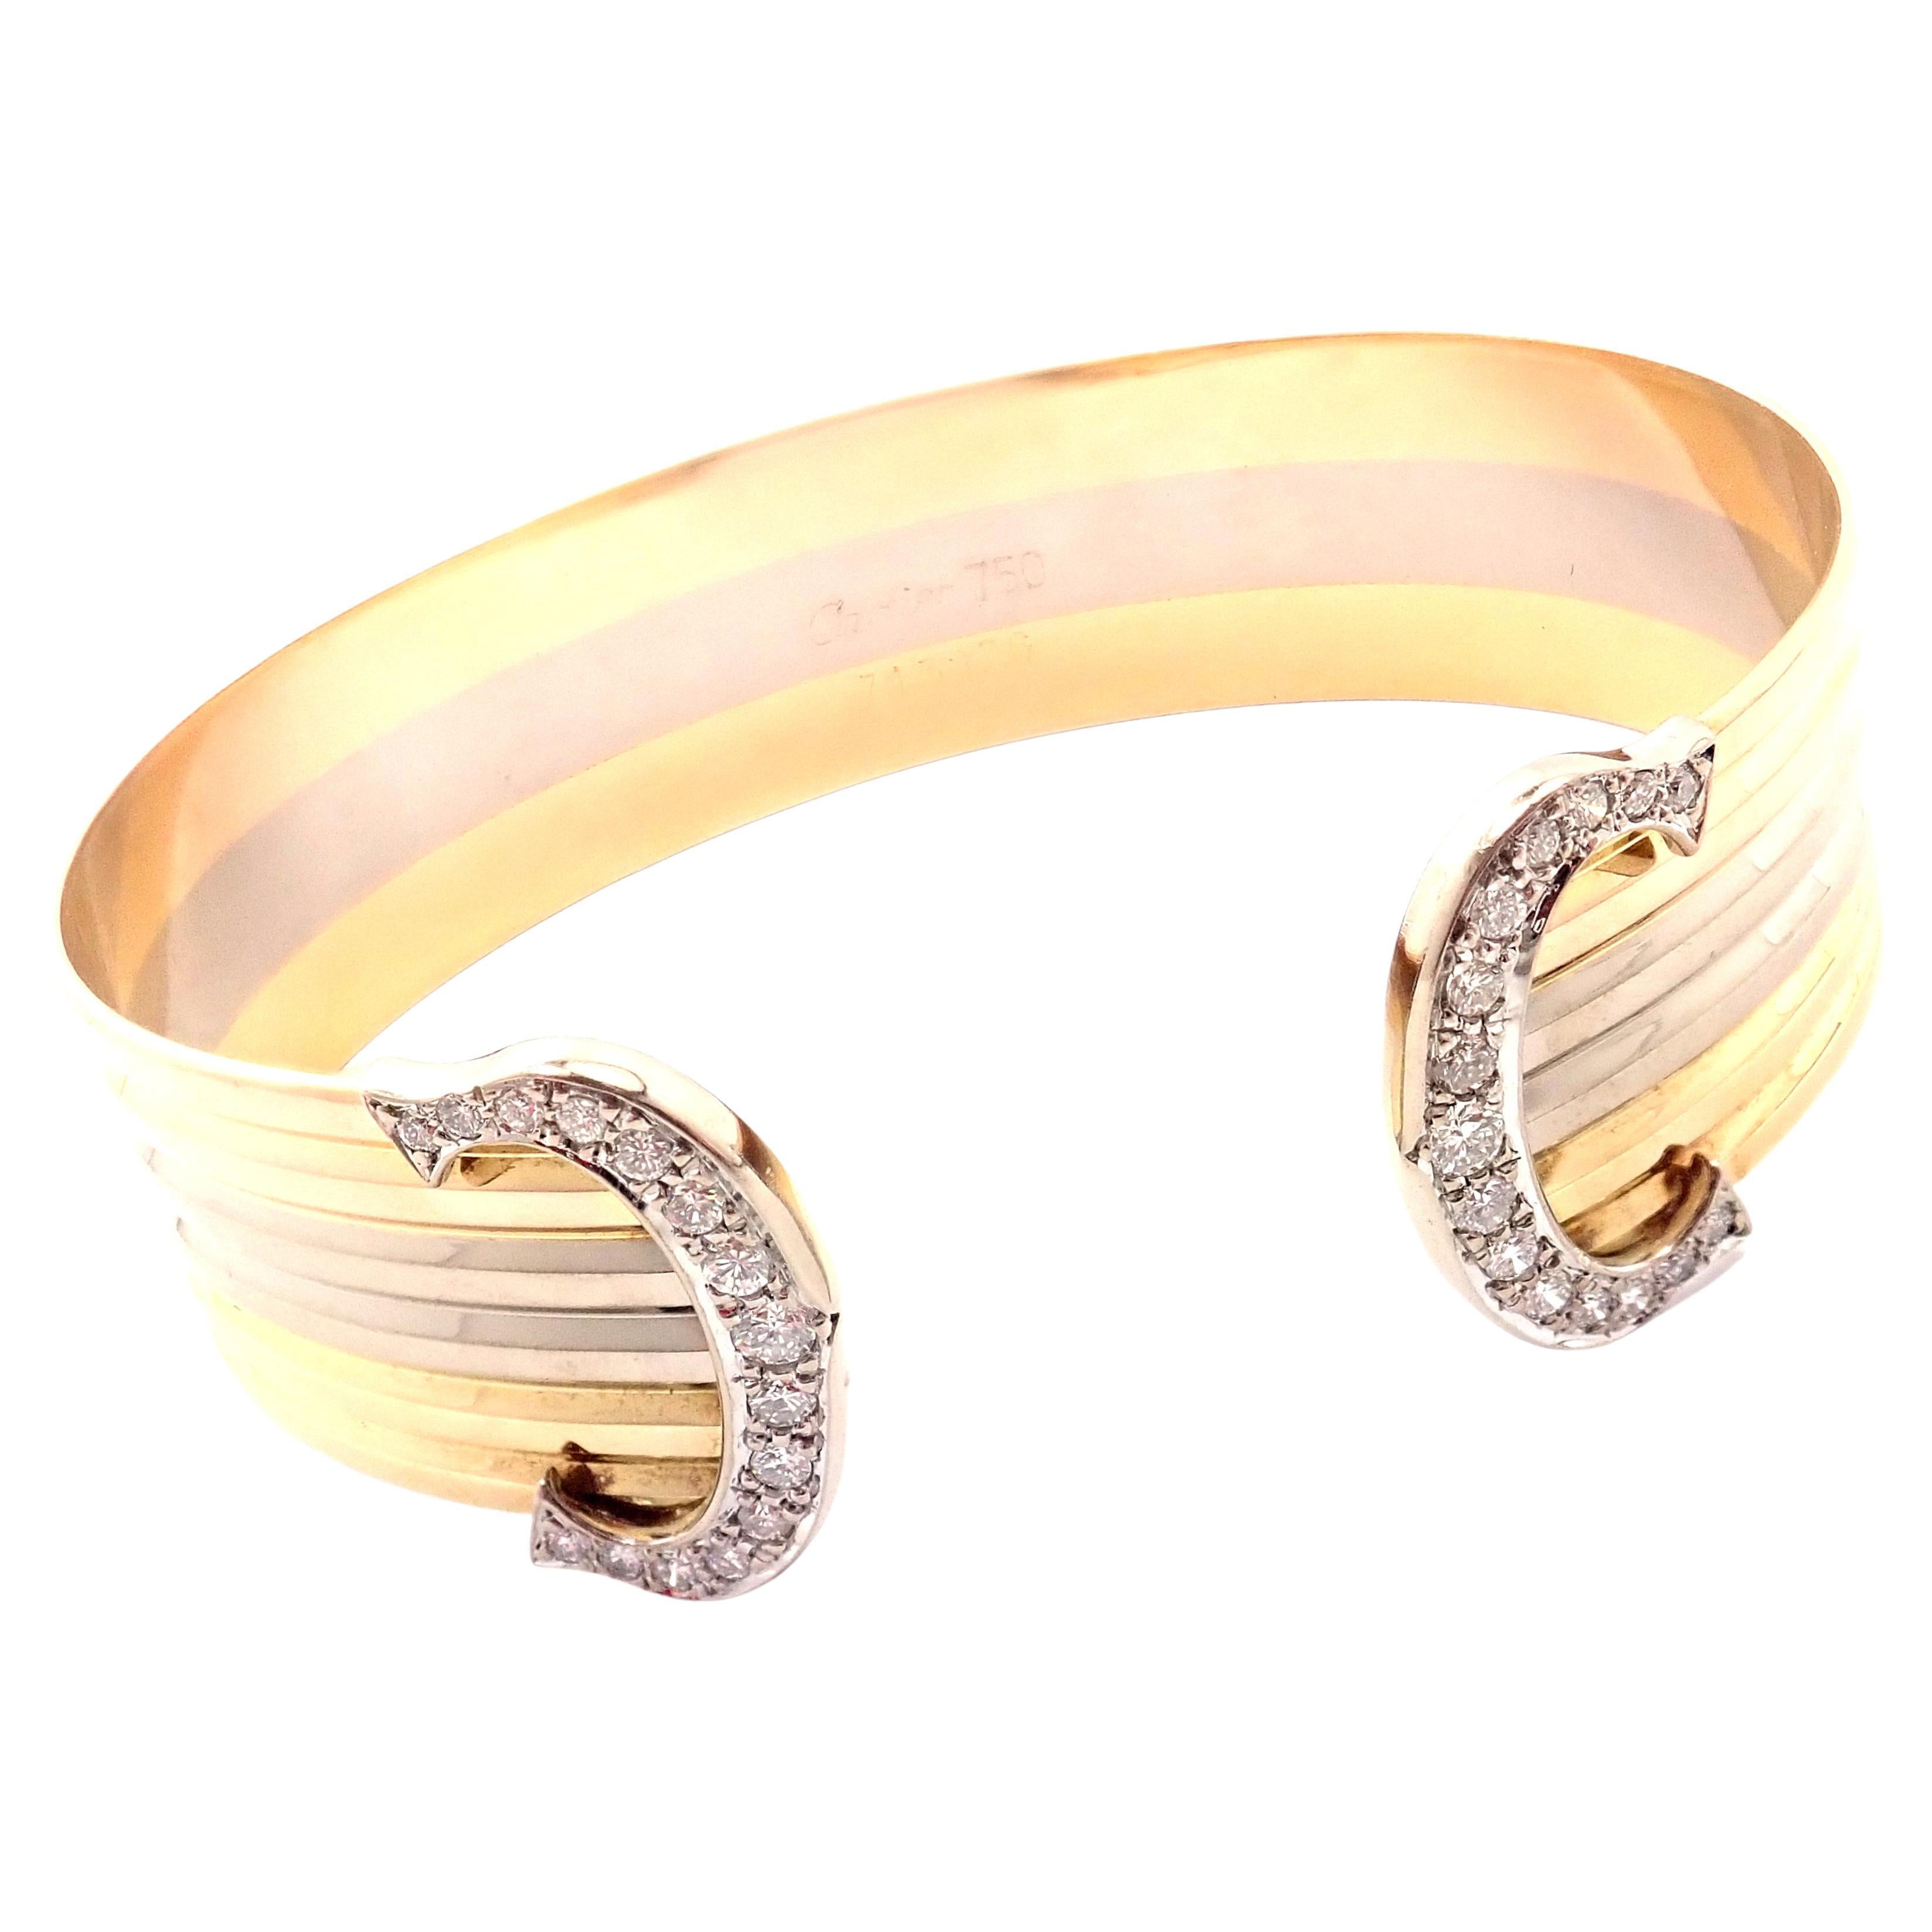 8 inch Round Double Loop Bangle Bracelet with a Trinity Irish Knot charm.